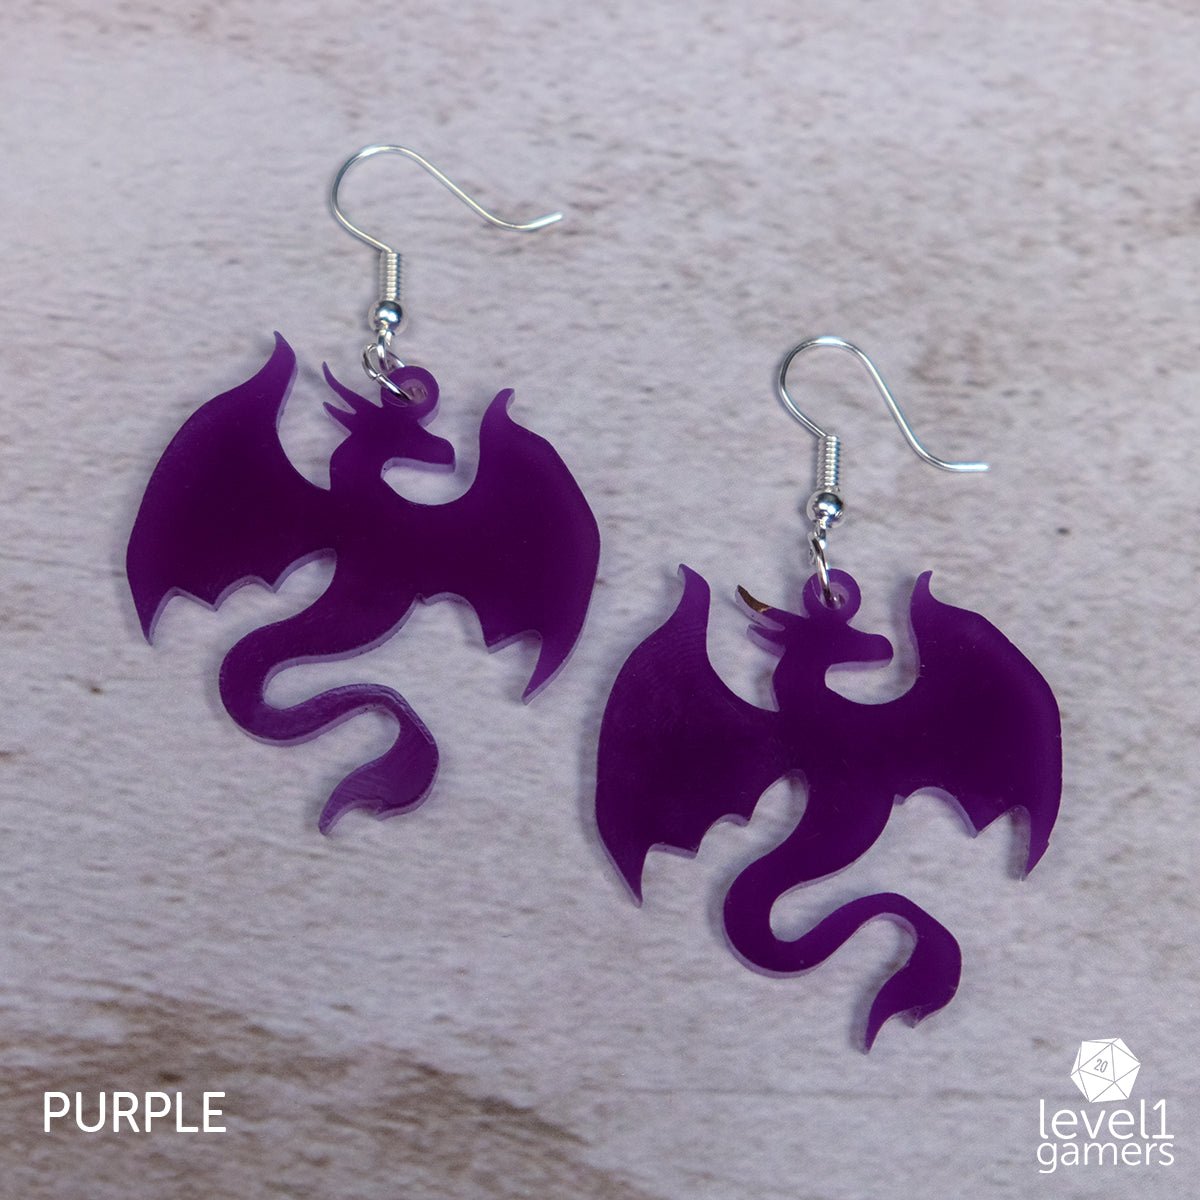 Dragon Acrylic Earrings  Level 1 Gamers Pendant Purple 